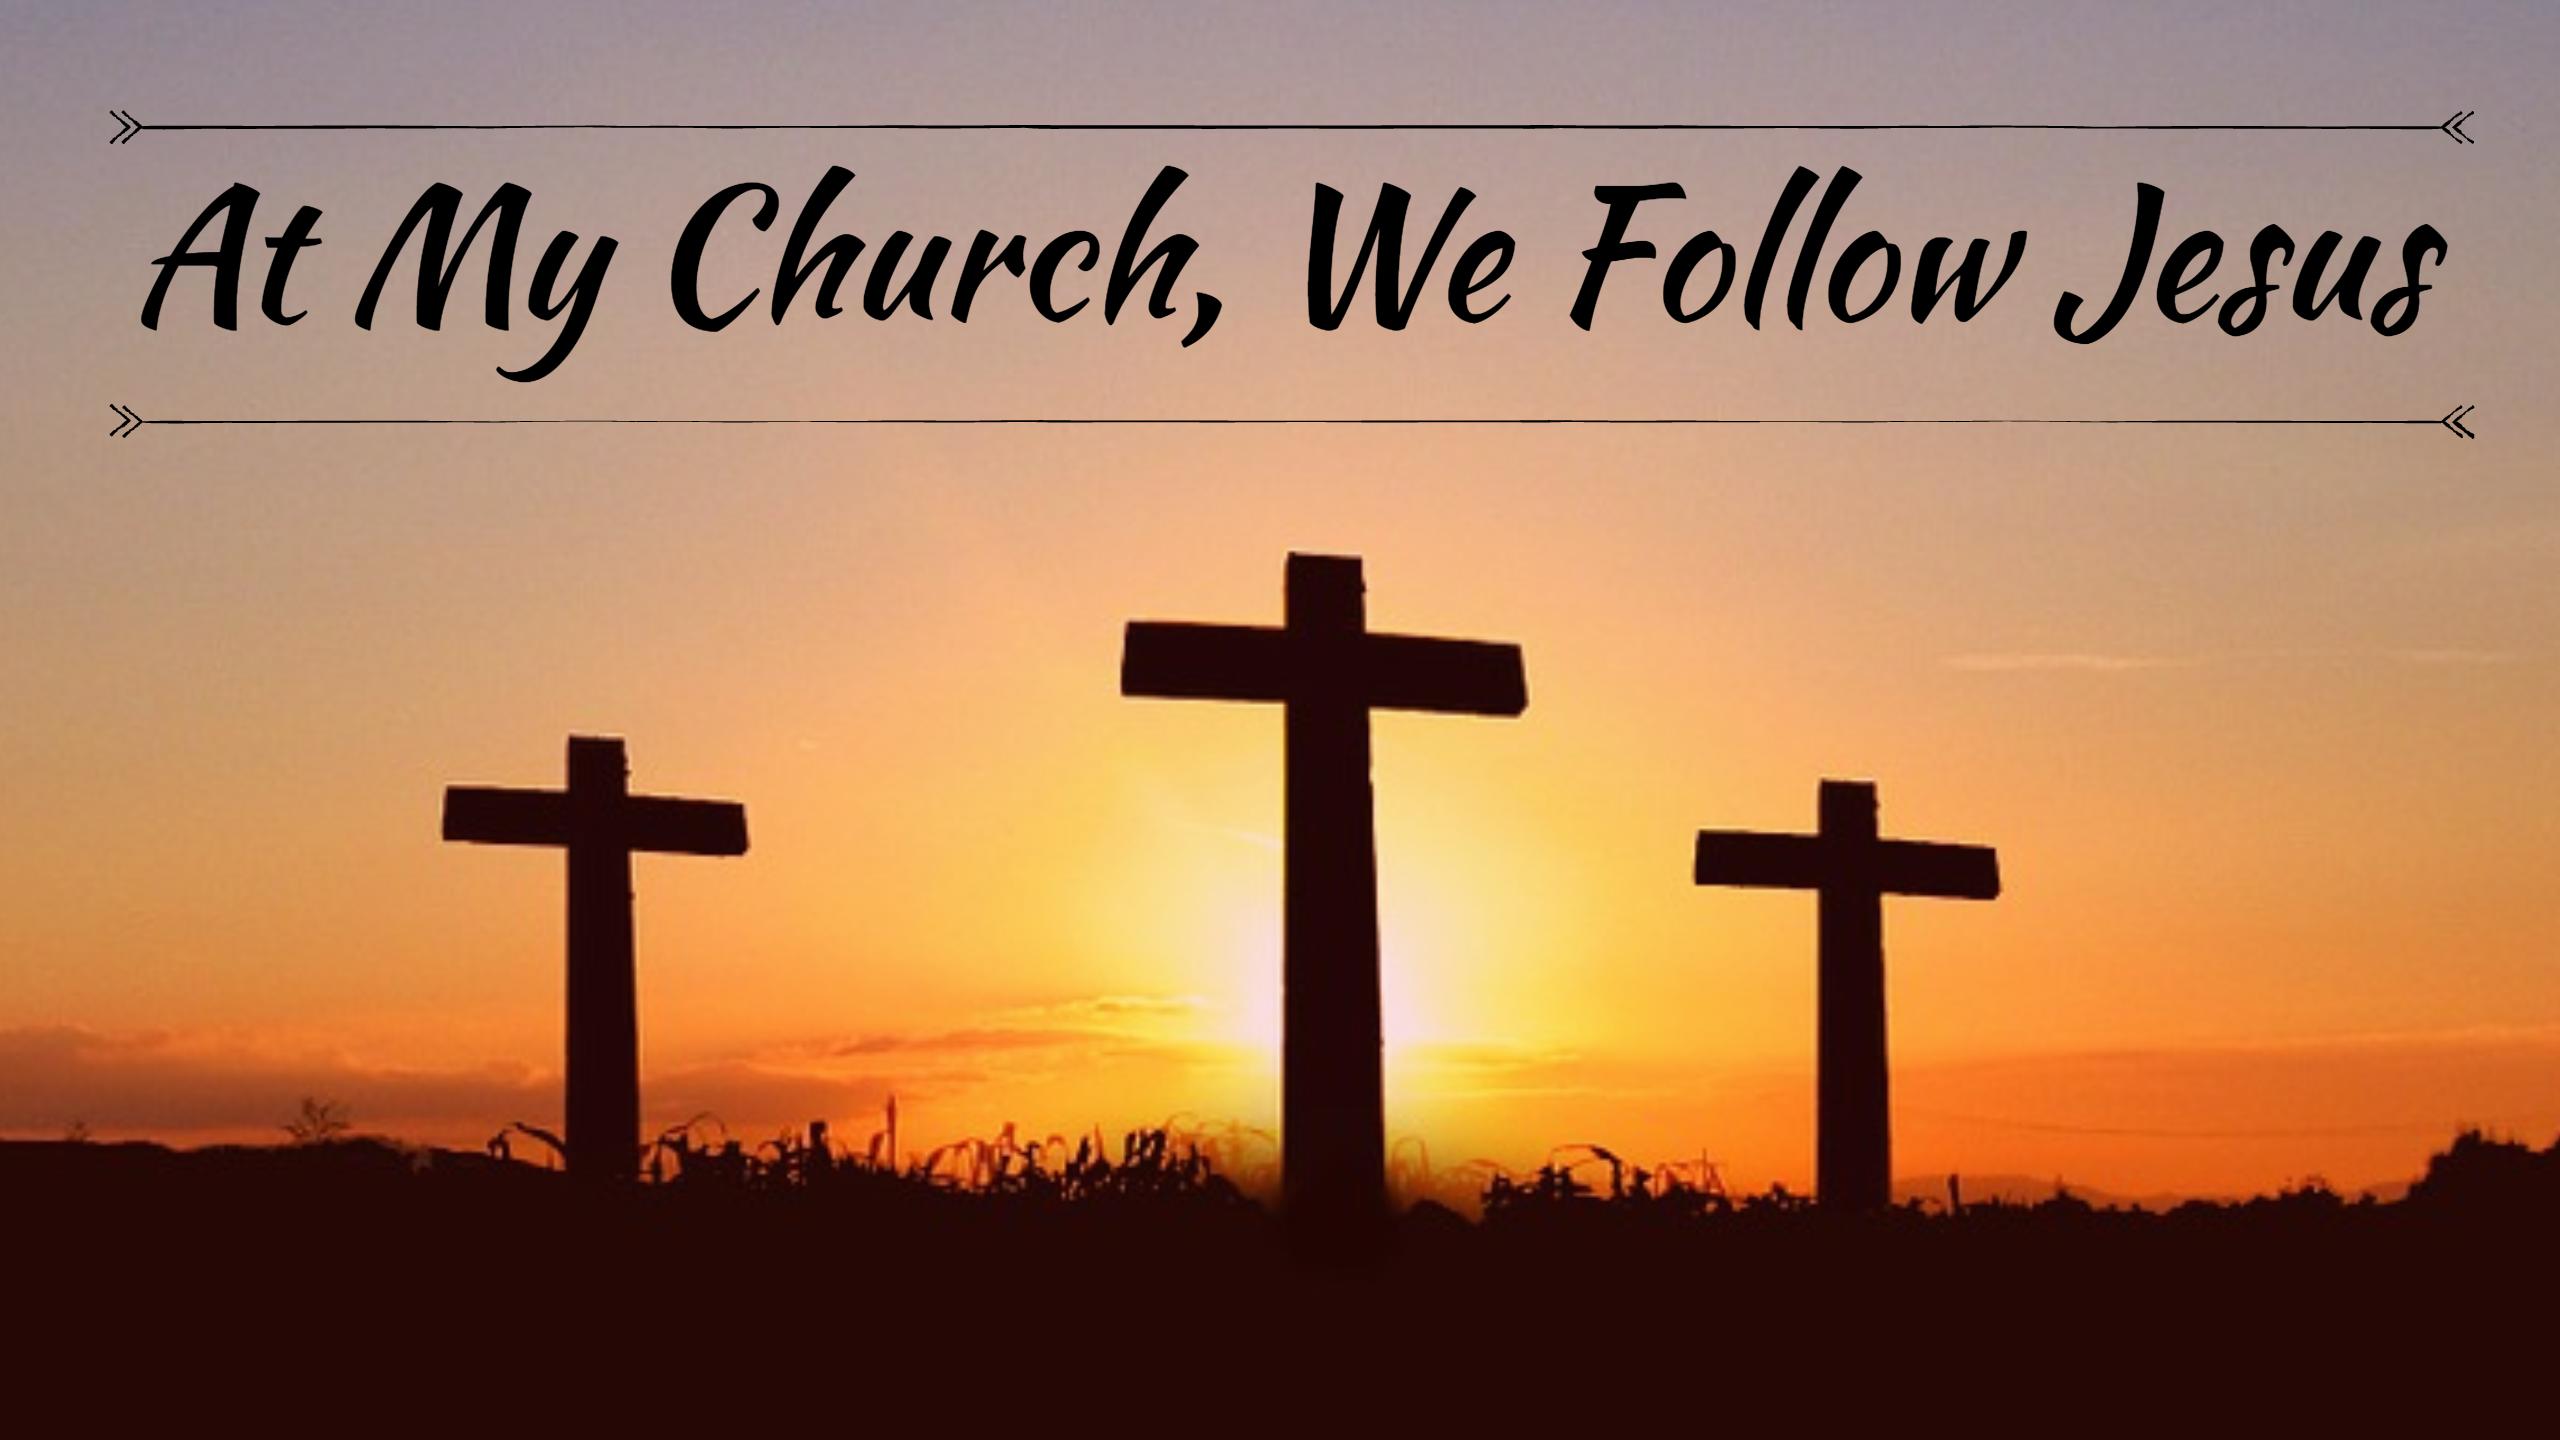 At My Church We Follow Jesus